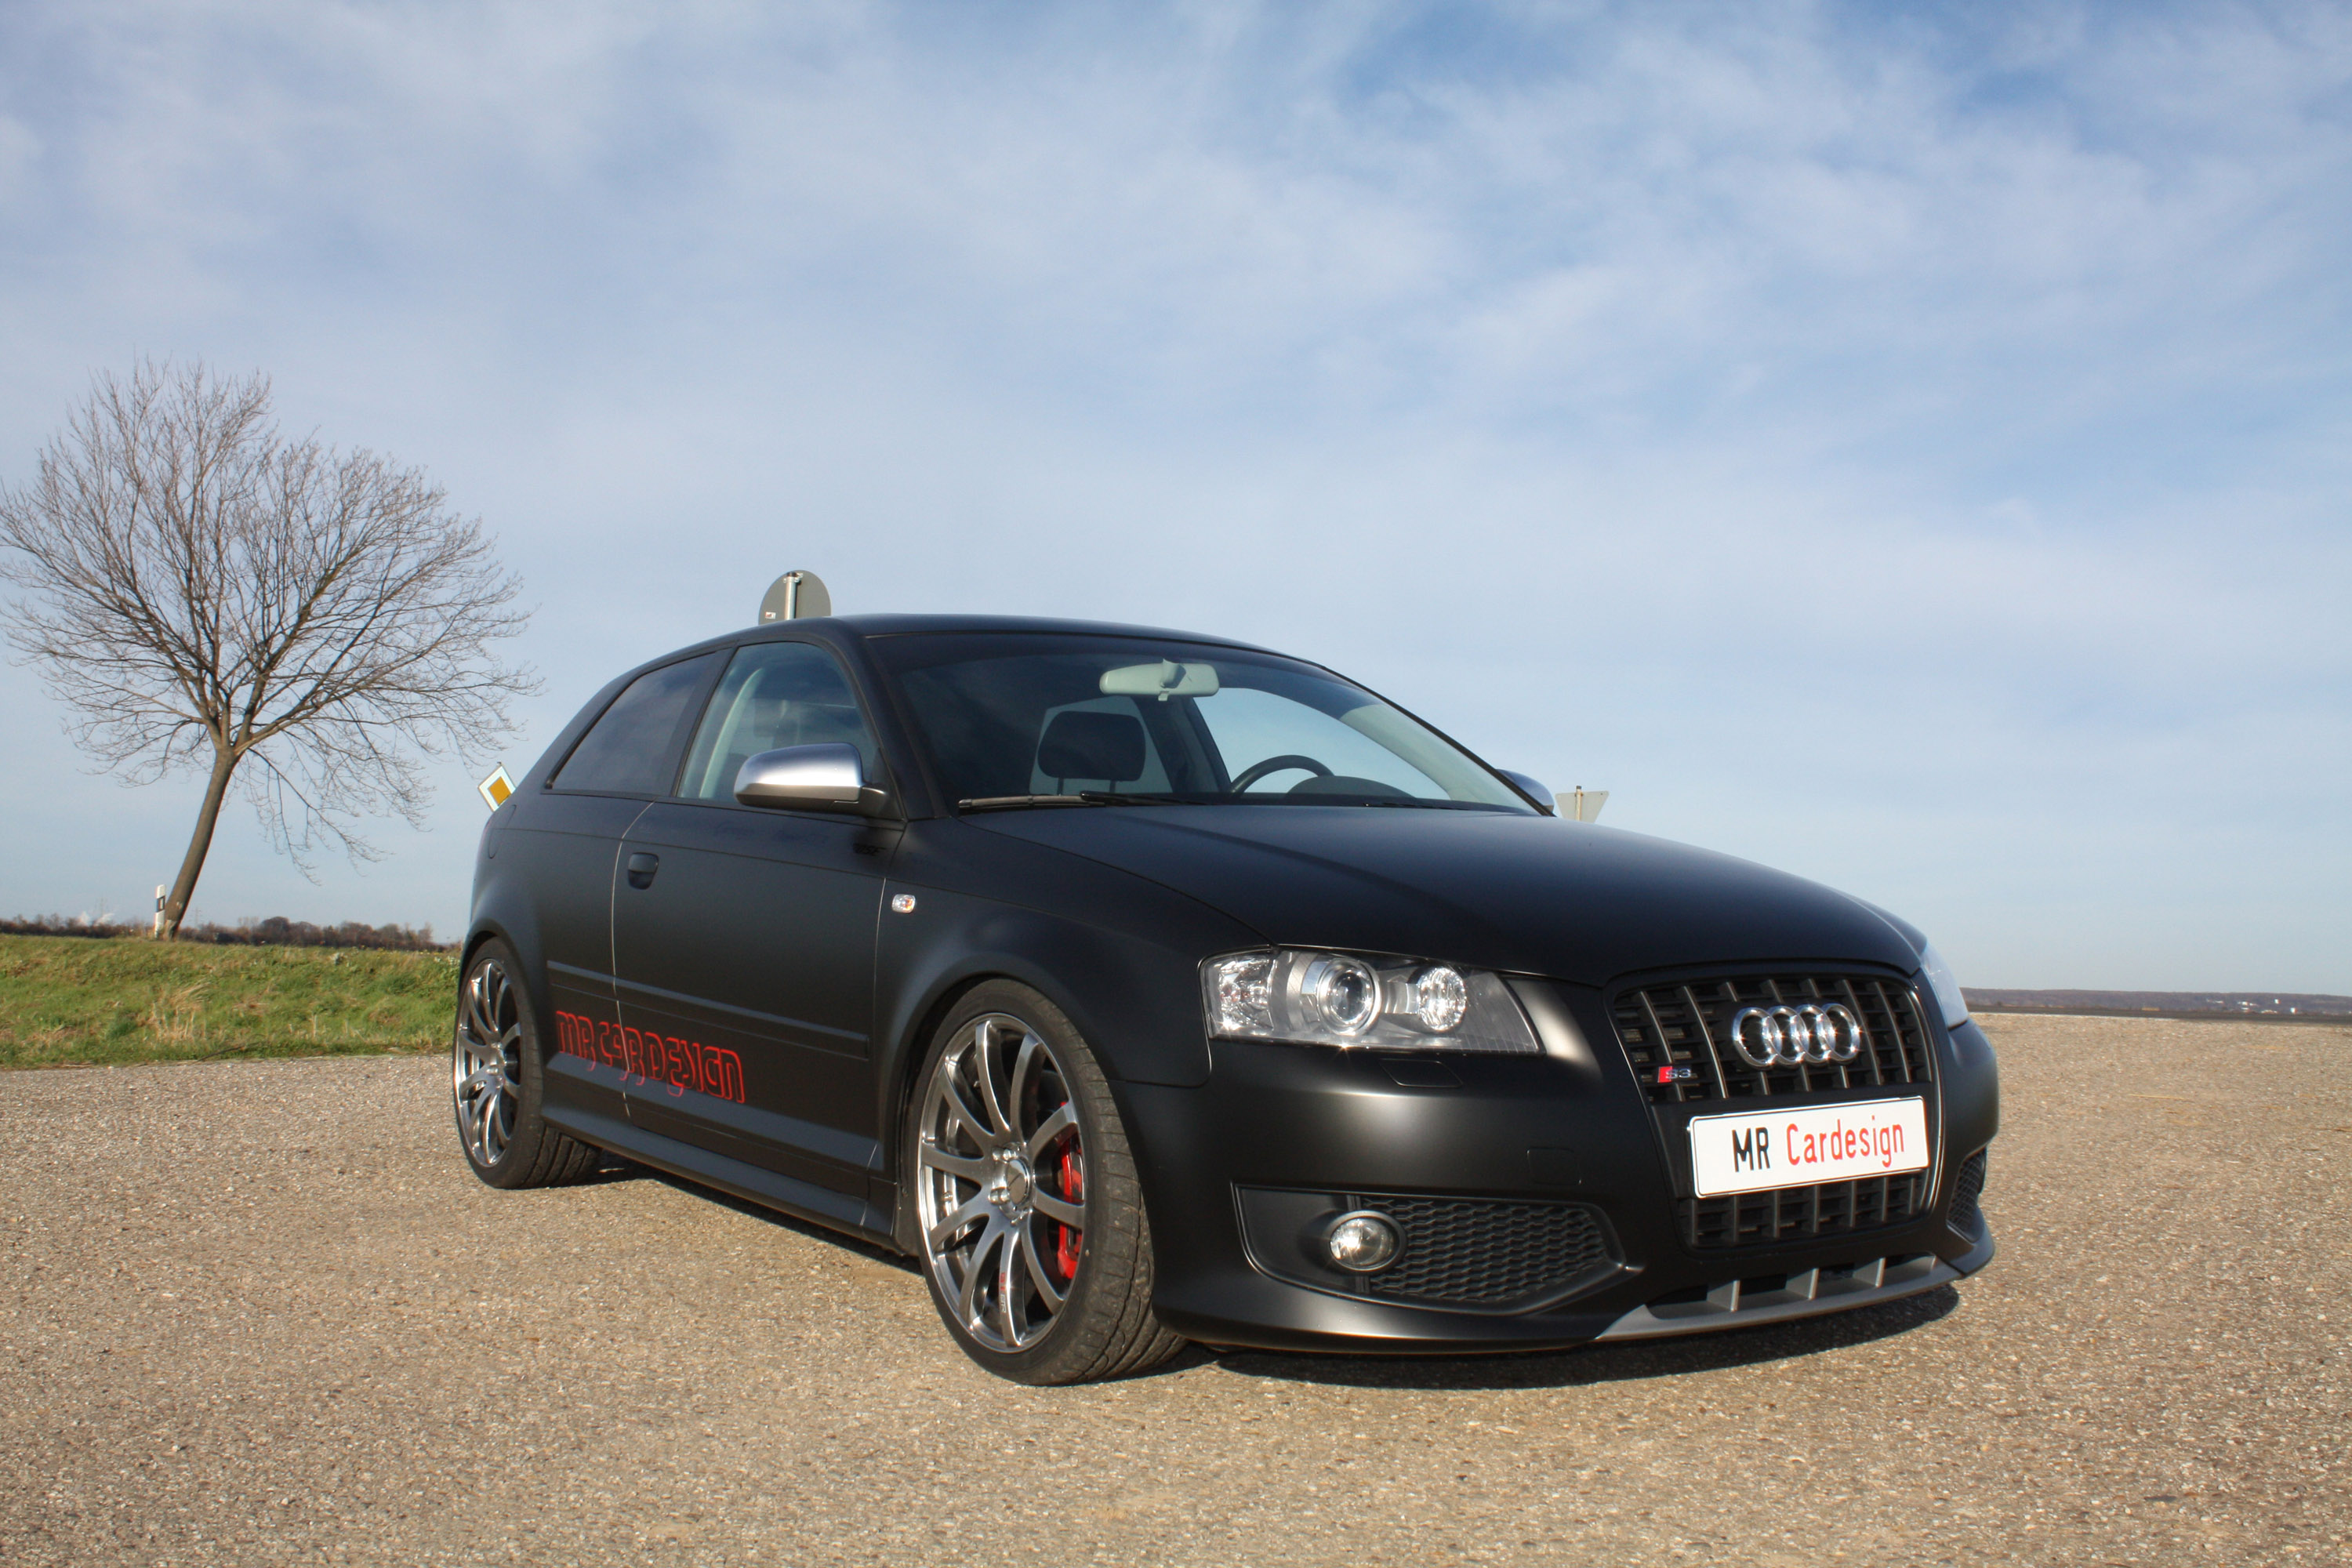 Mr Car Design Audi S3 Black Performance Edition Picture